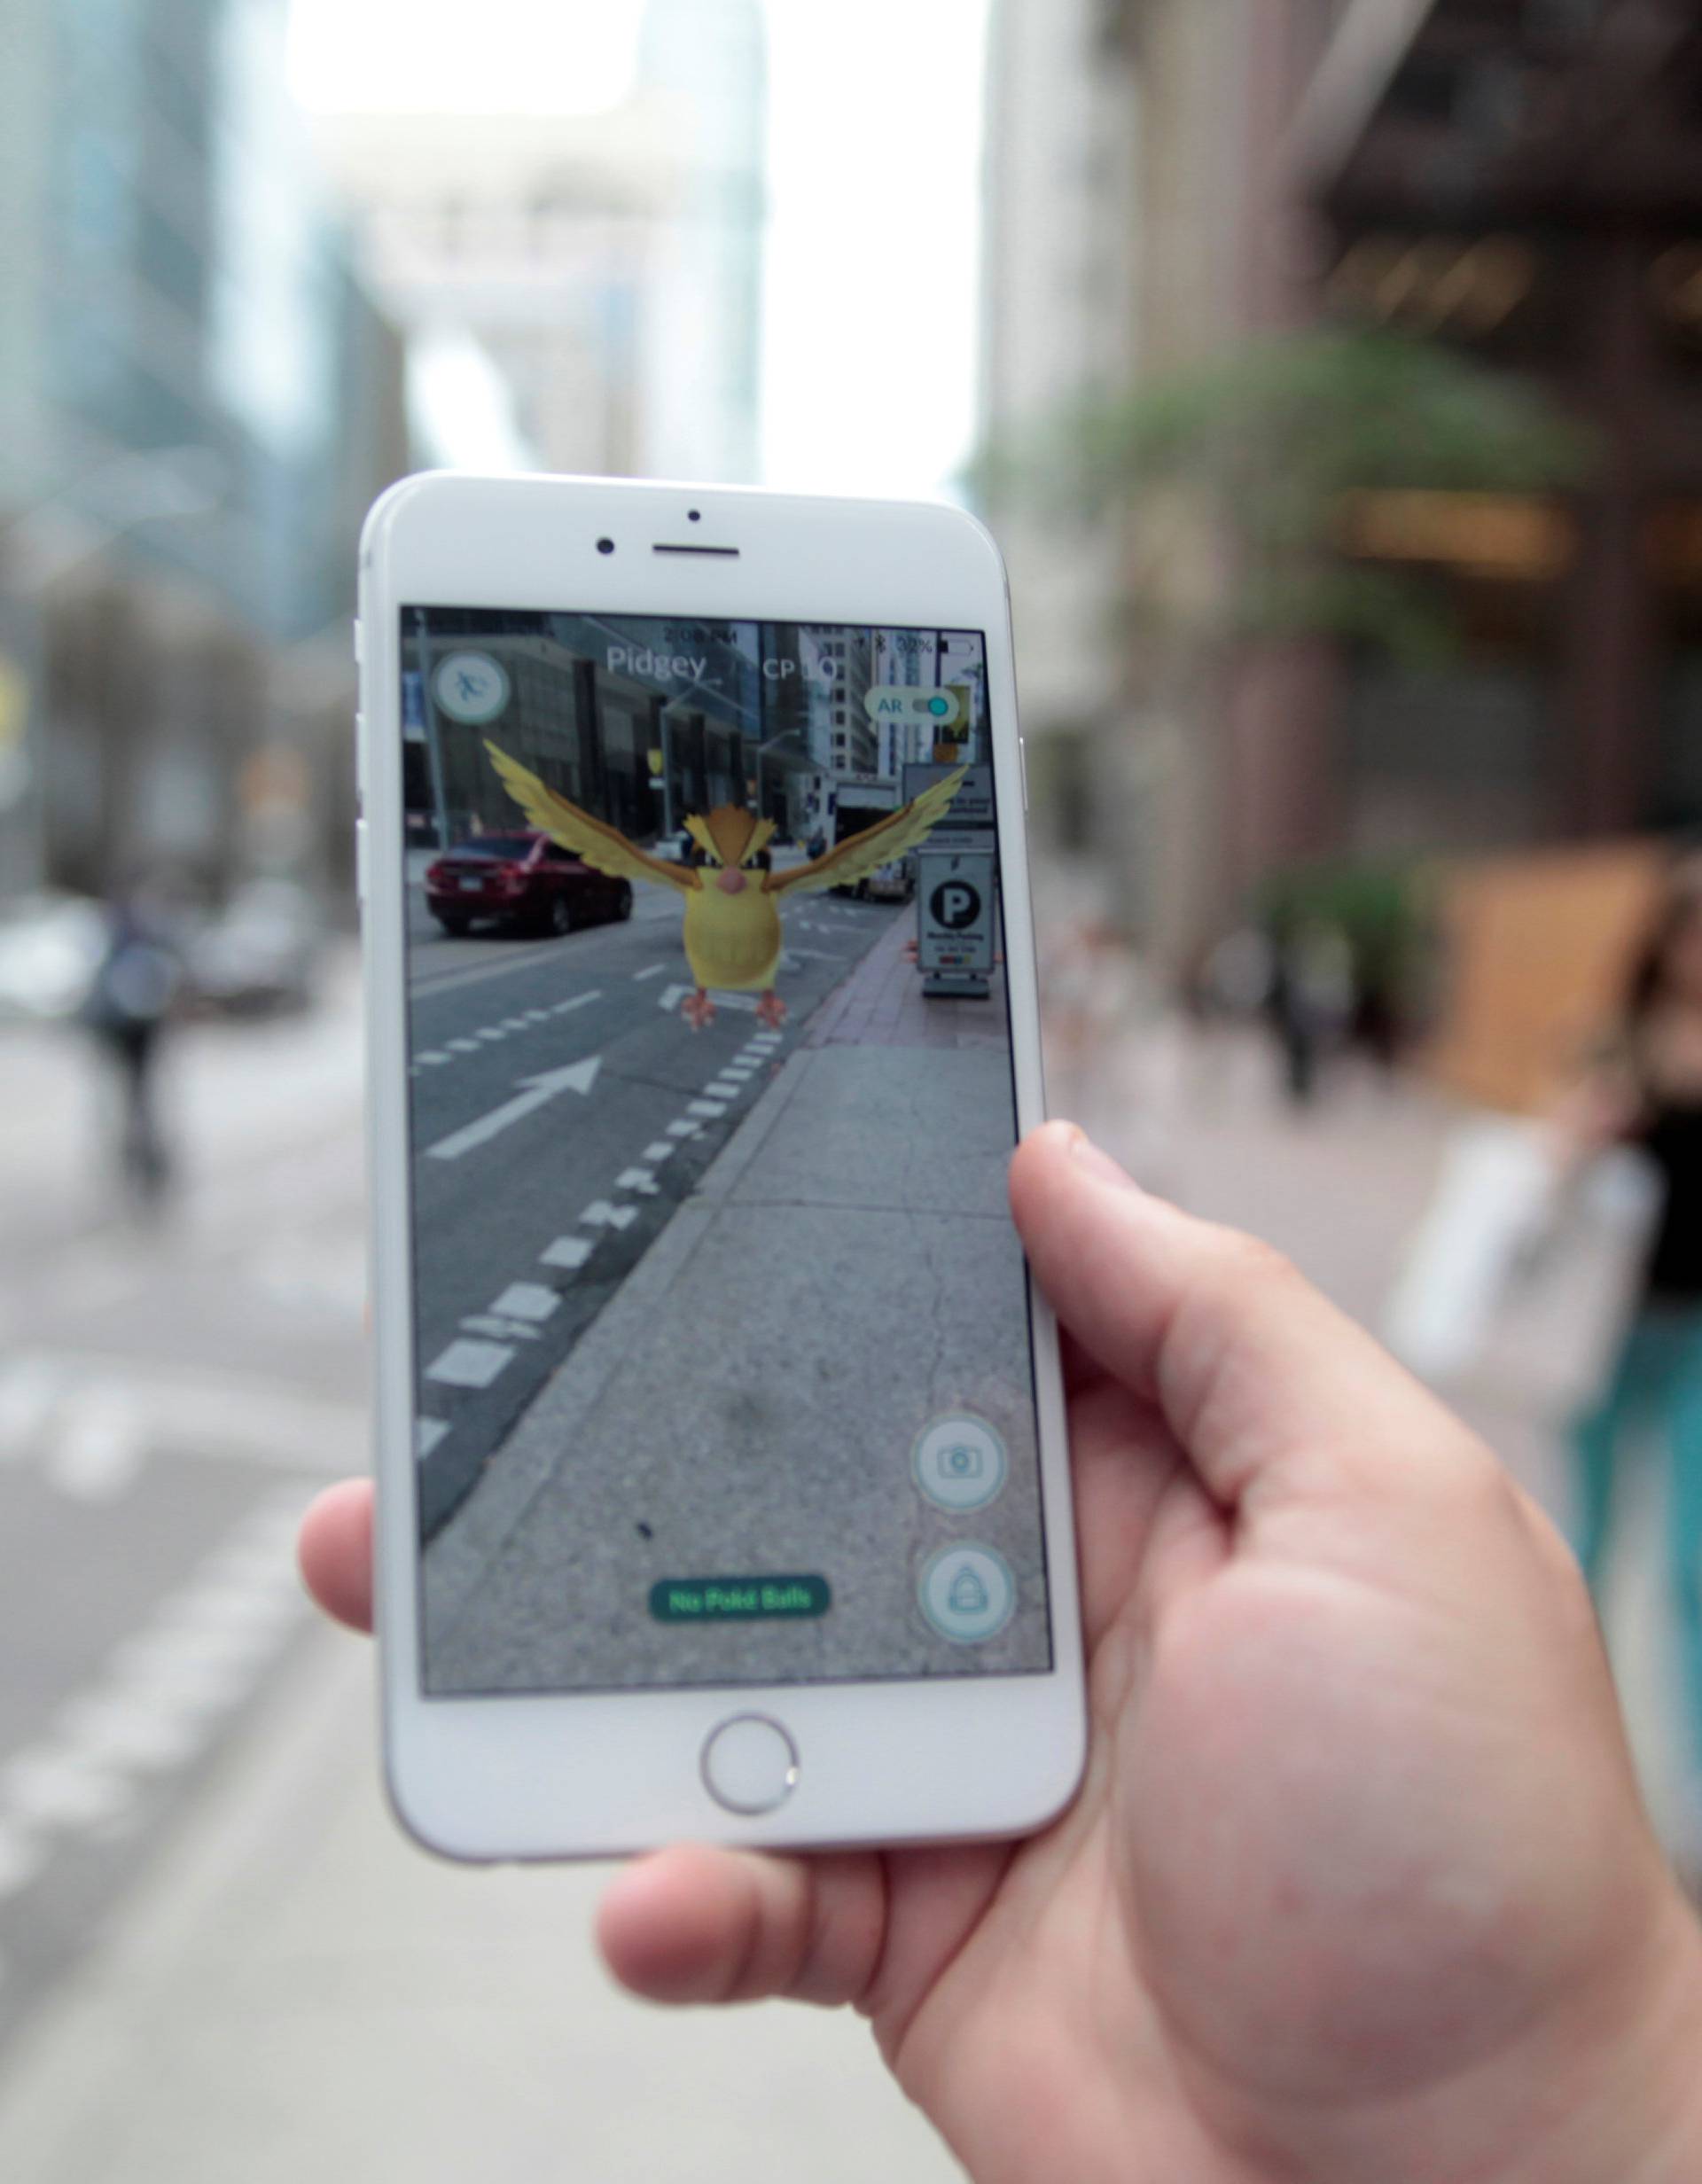 Photo illustration of a "Pidgey" Pokemon seen on the screen of the Pokemon Go mobile app 